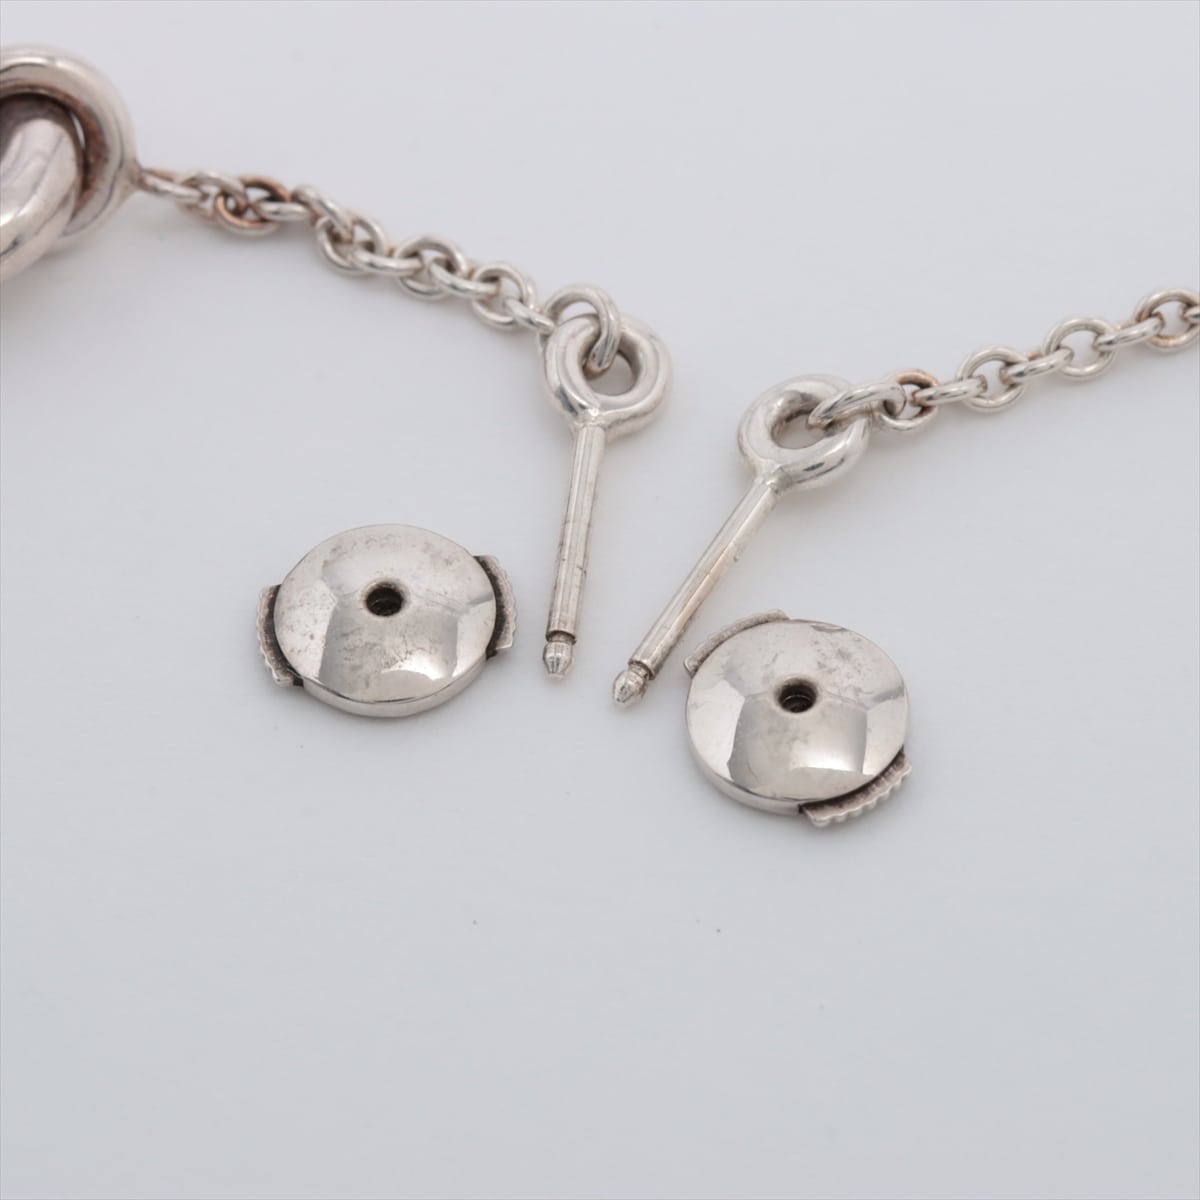 Hermès Chaîne d'Ancre Piercing jewelry (for both ears) 925 6.3g Silver